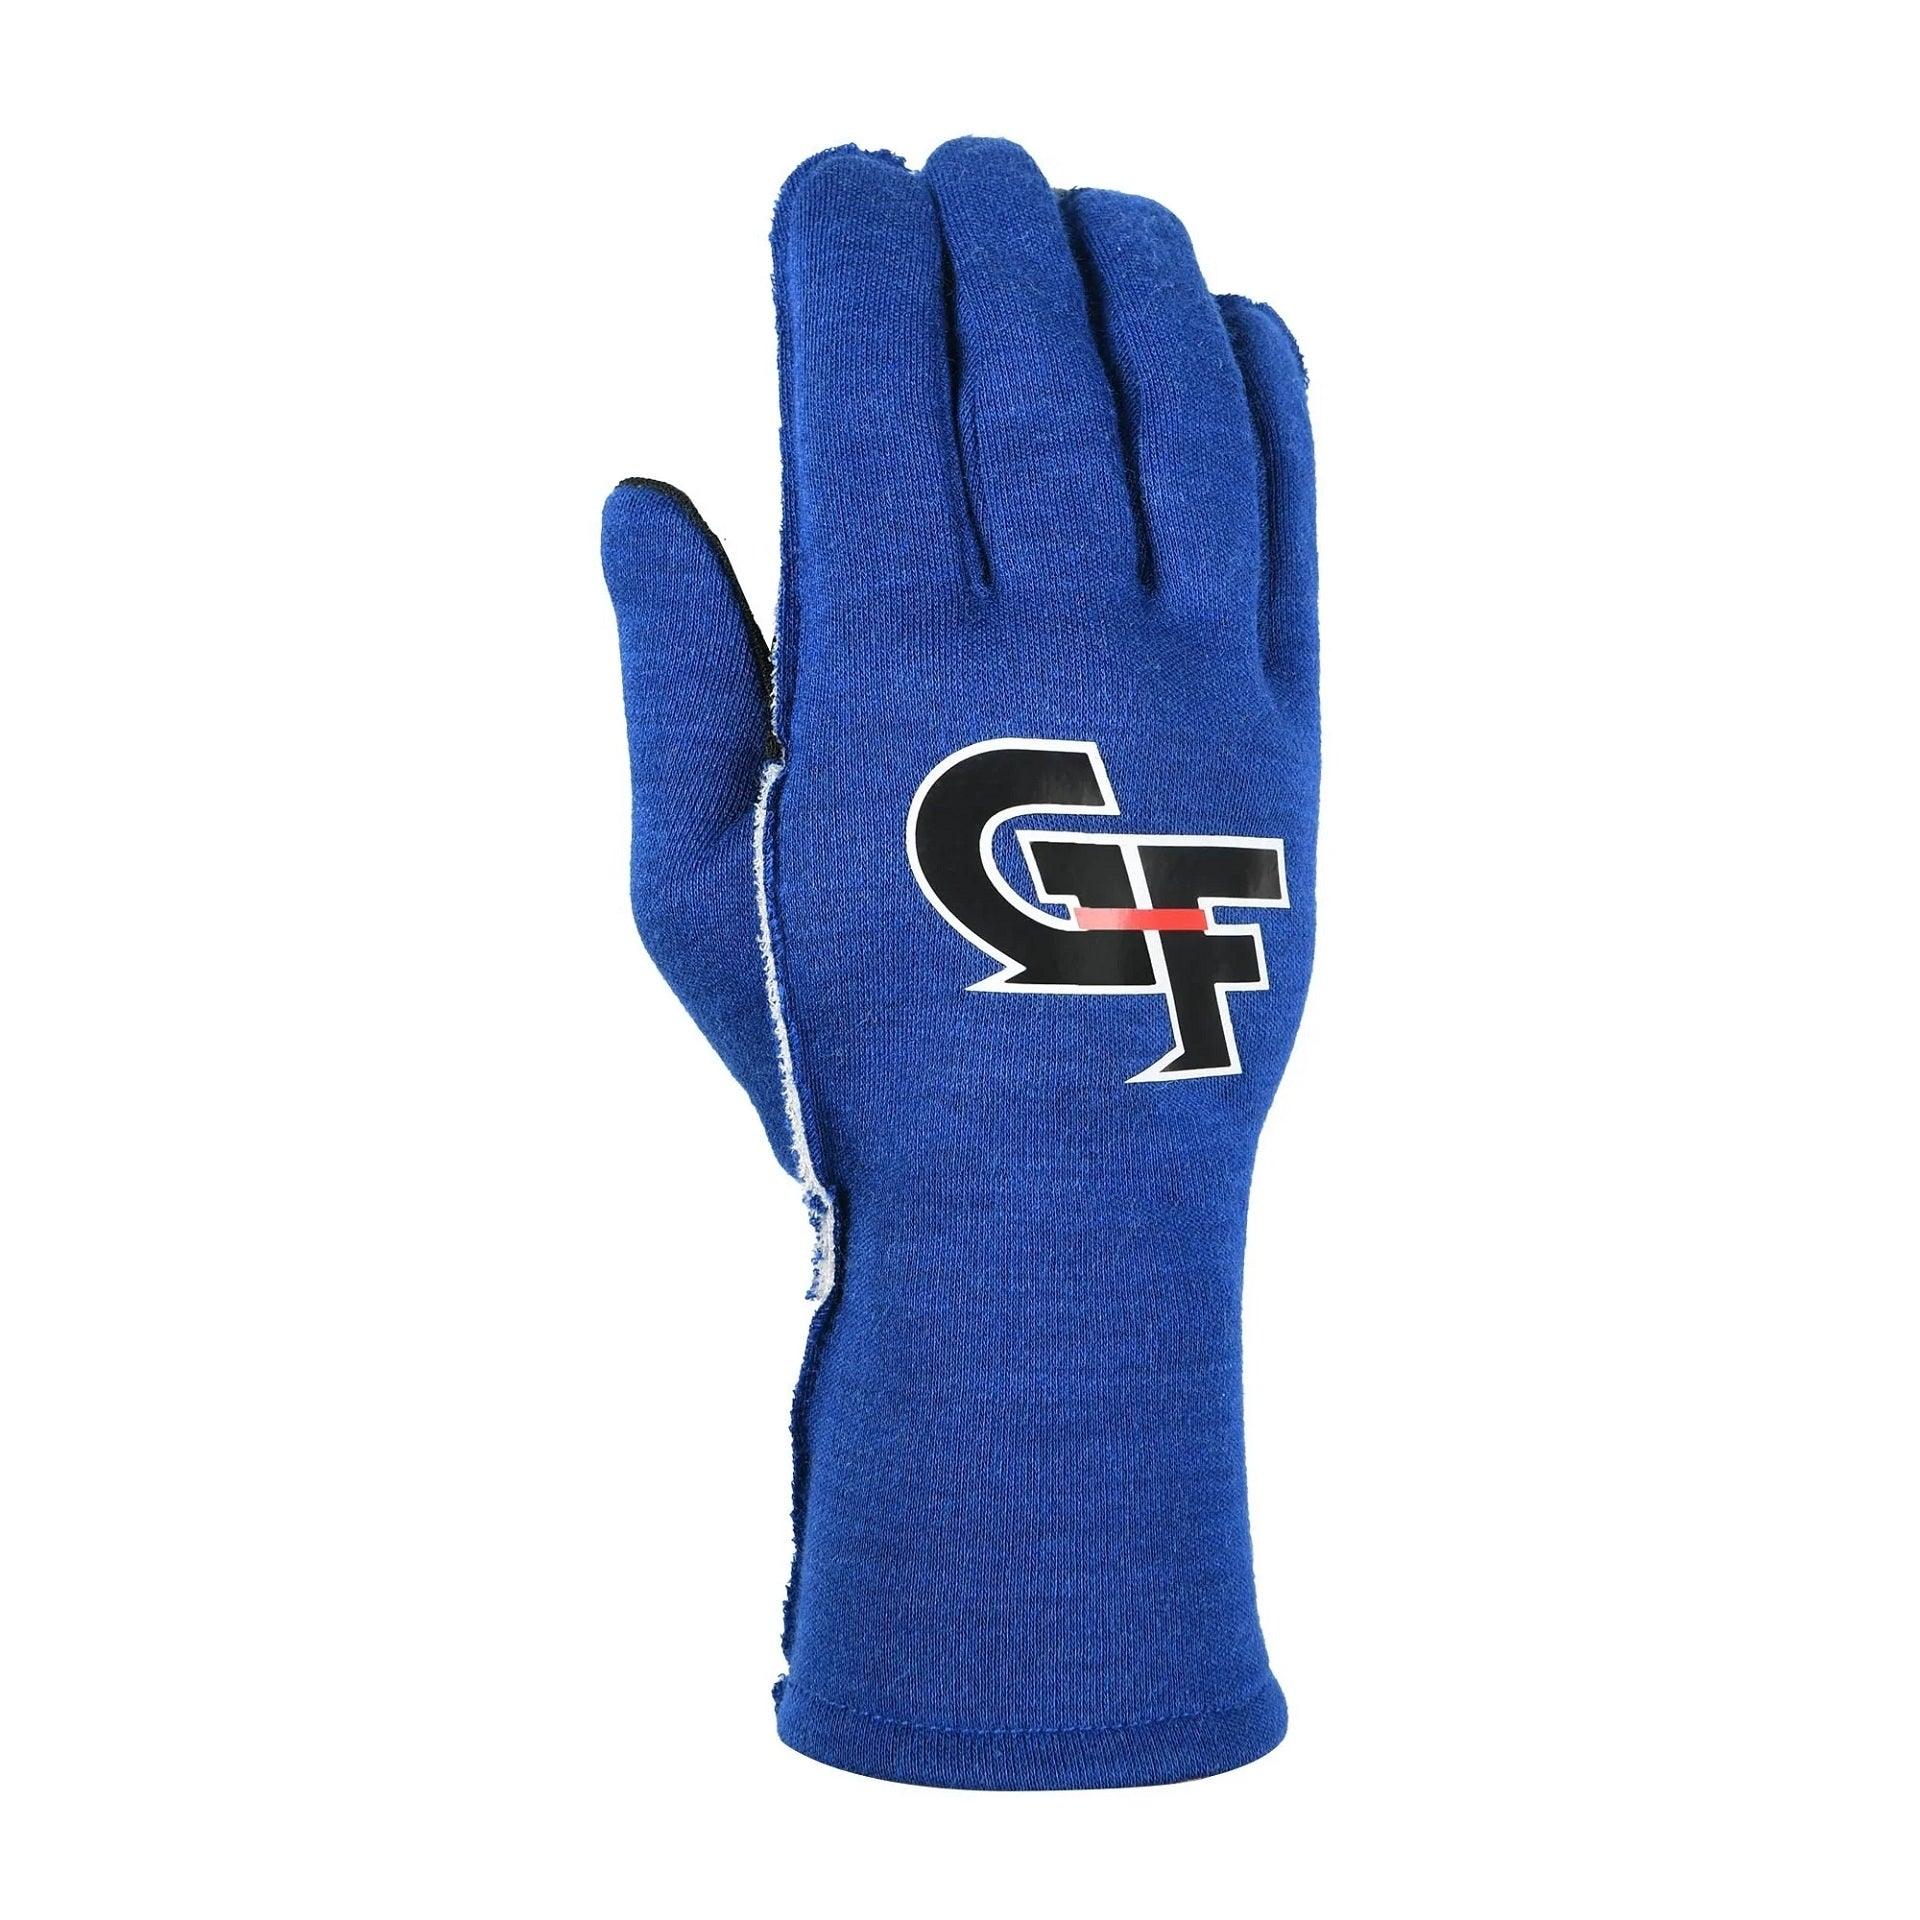 Gloves G-Limit Youth Medium Blue - Burlile Performance Products